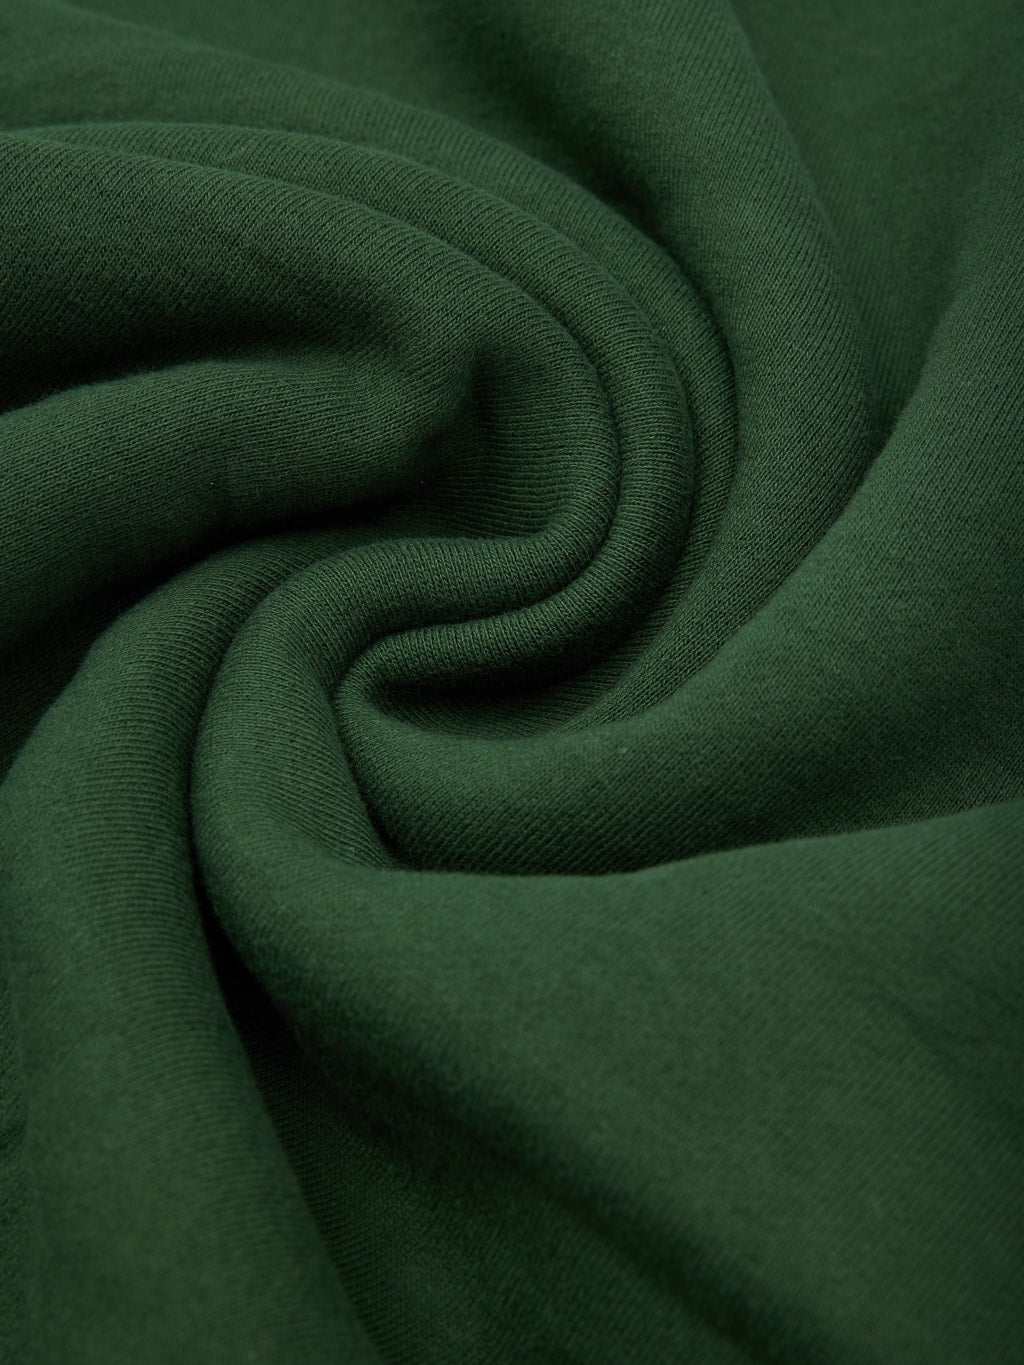 The Strike Gold Loopwheeled Sweatshirt Green texture